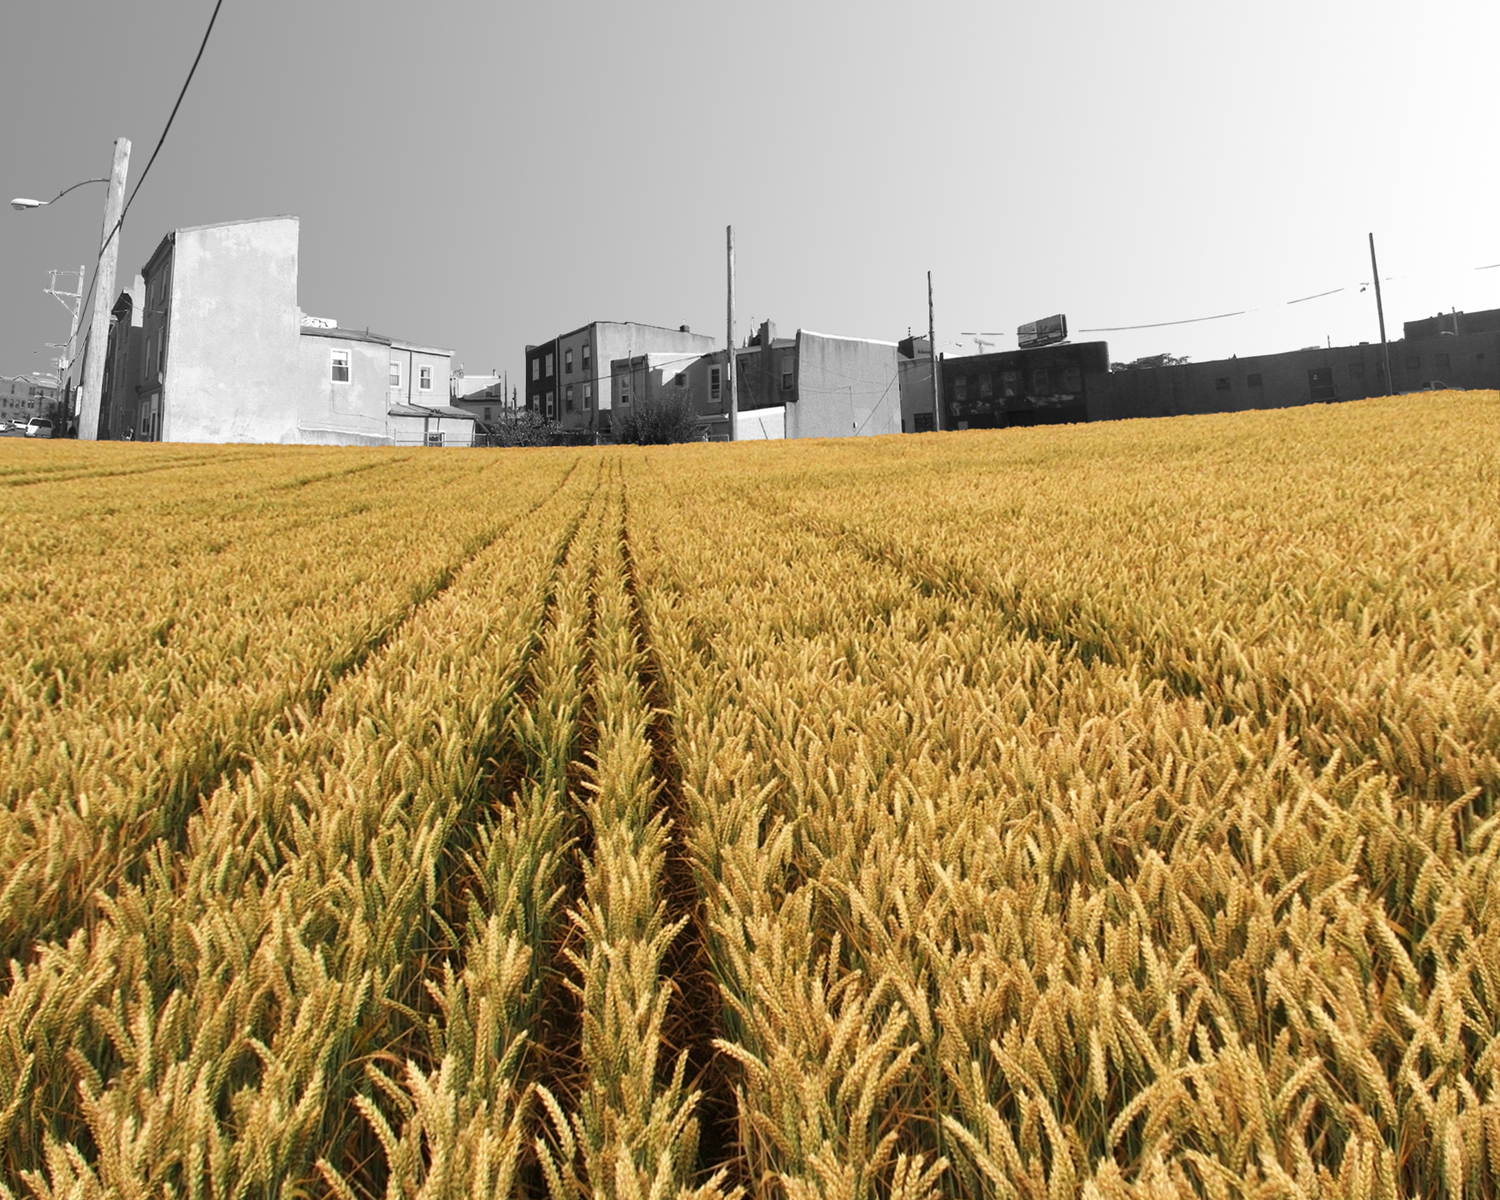 02_Farma_wheat-field.jpg